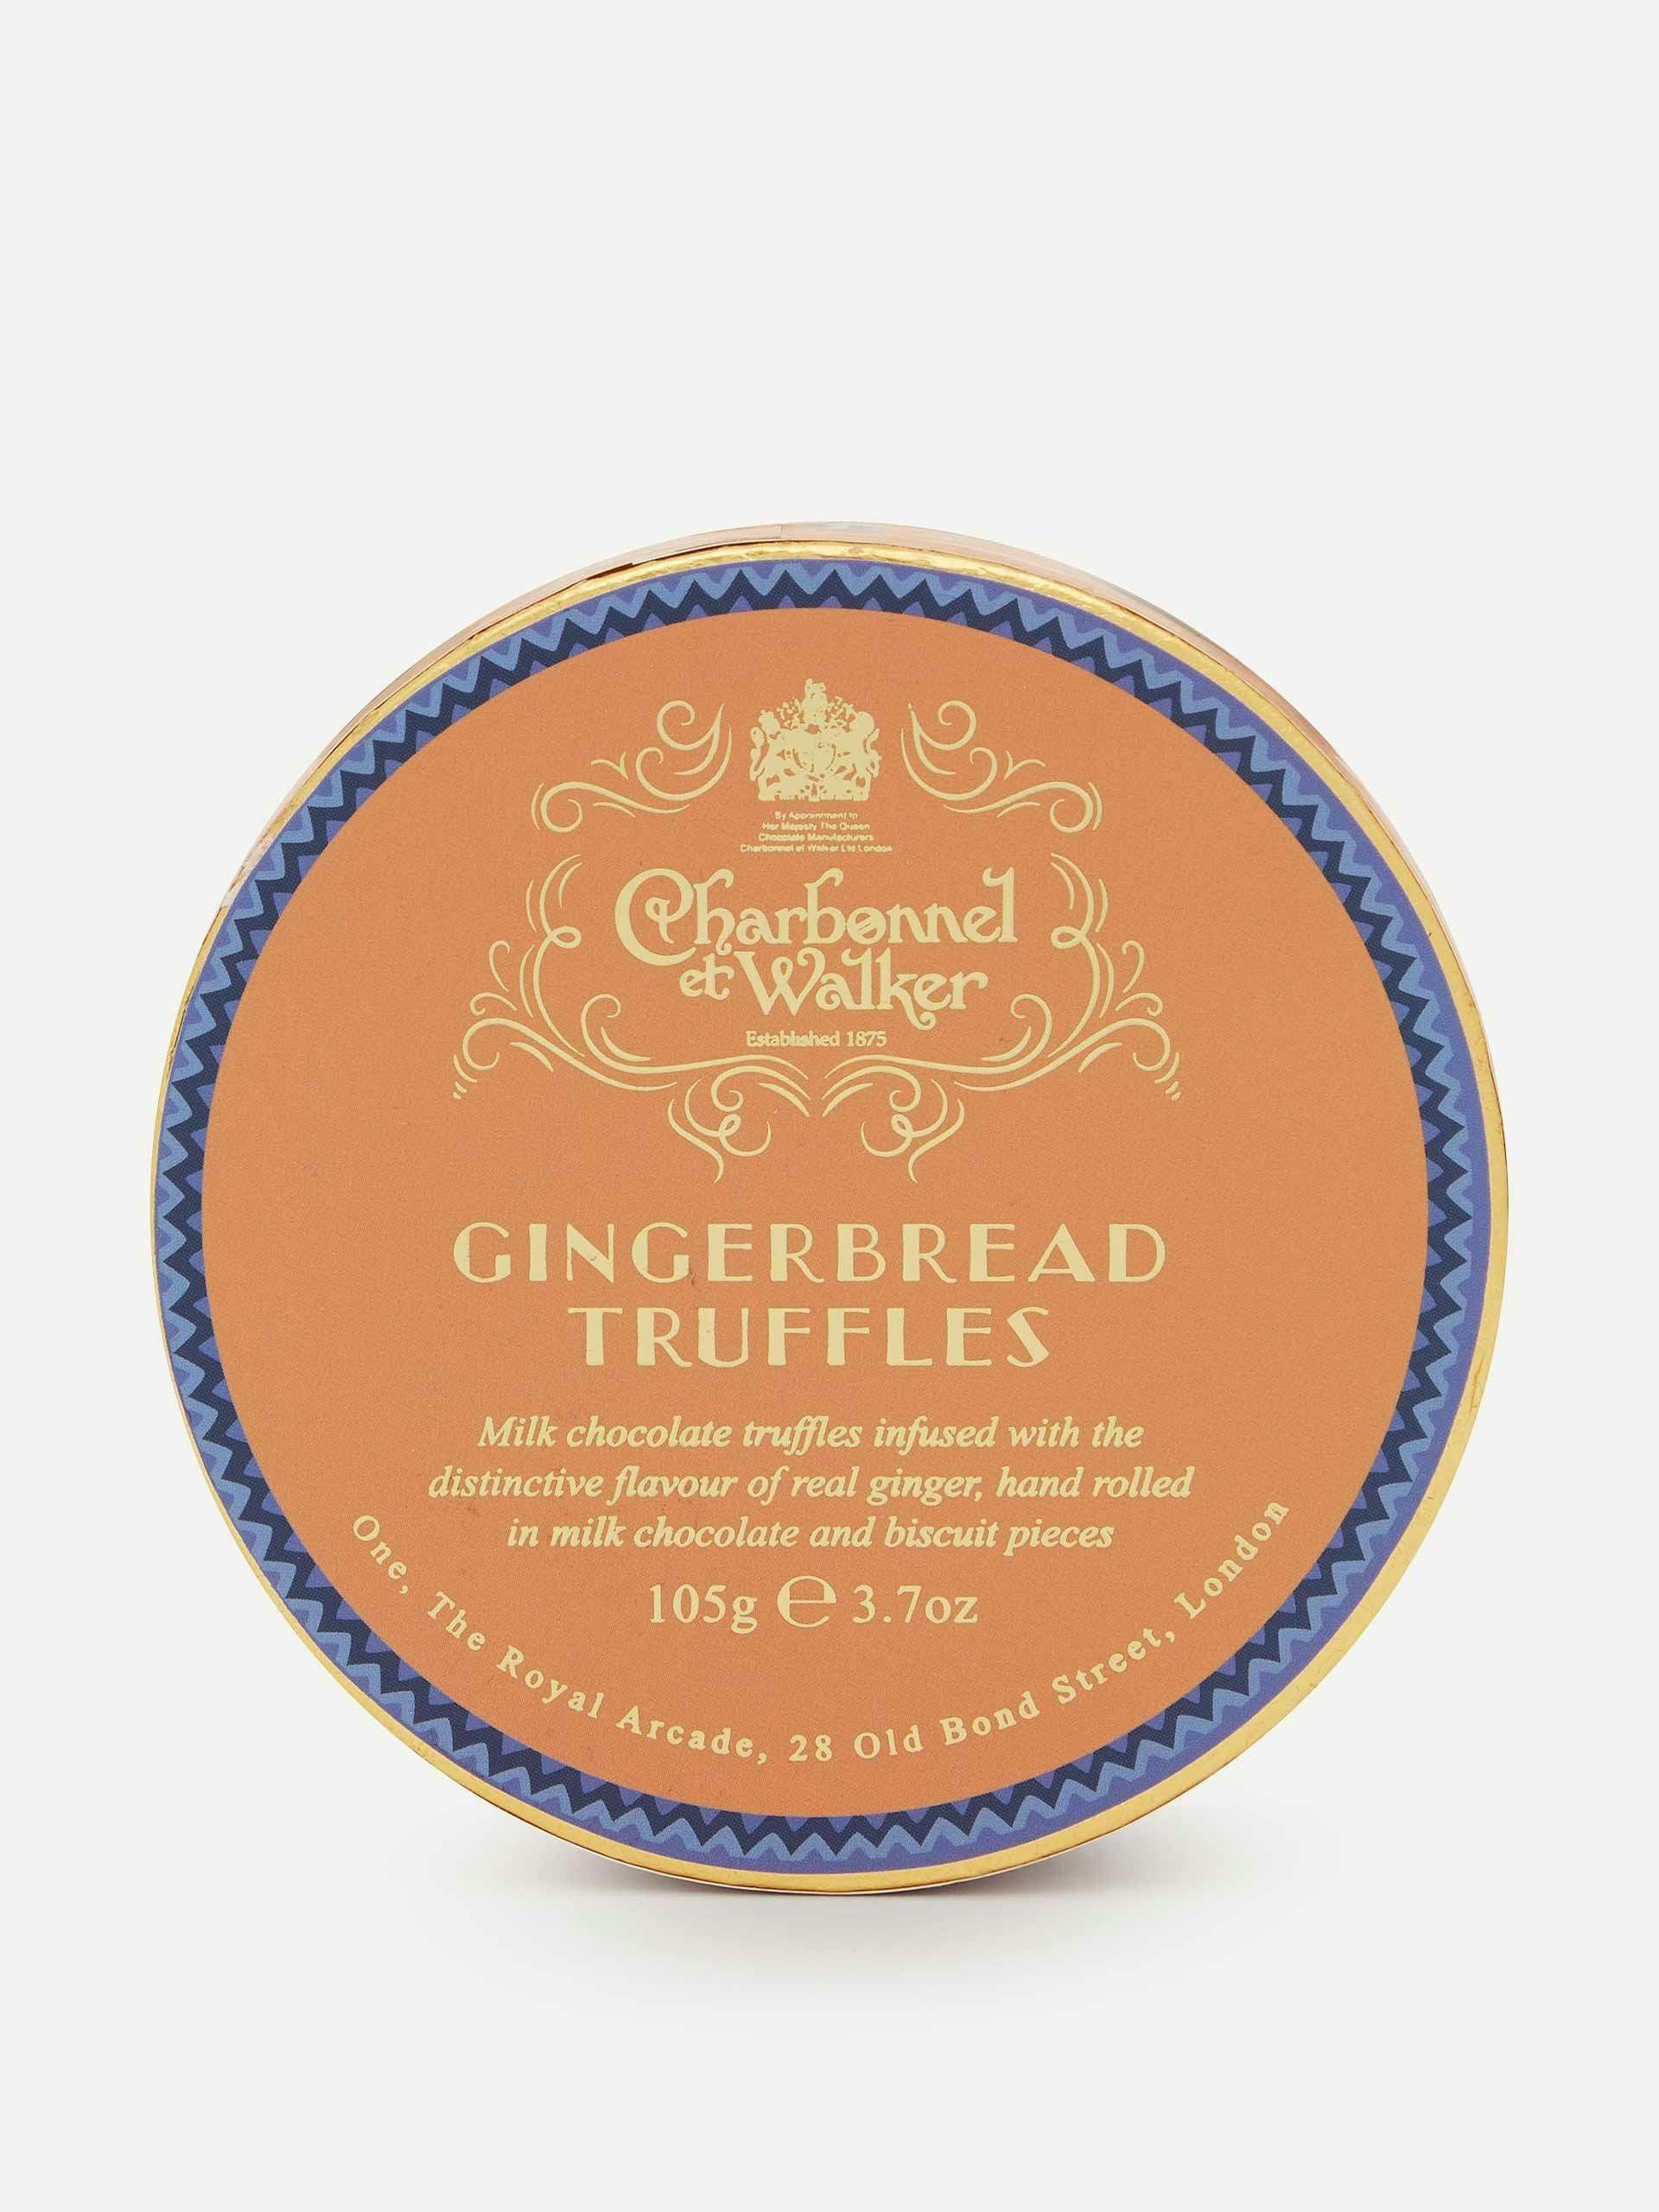 Gingerbread truffles